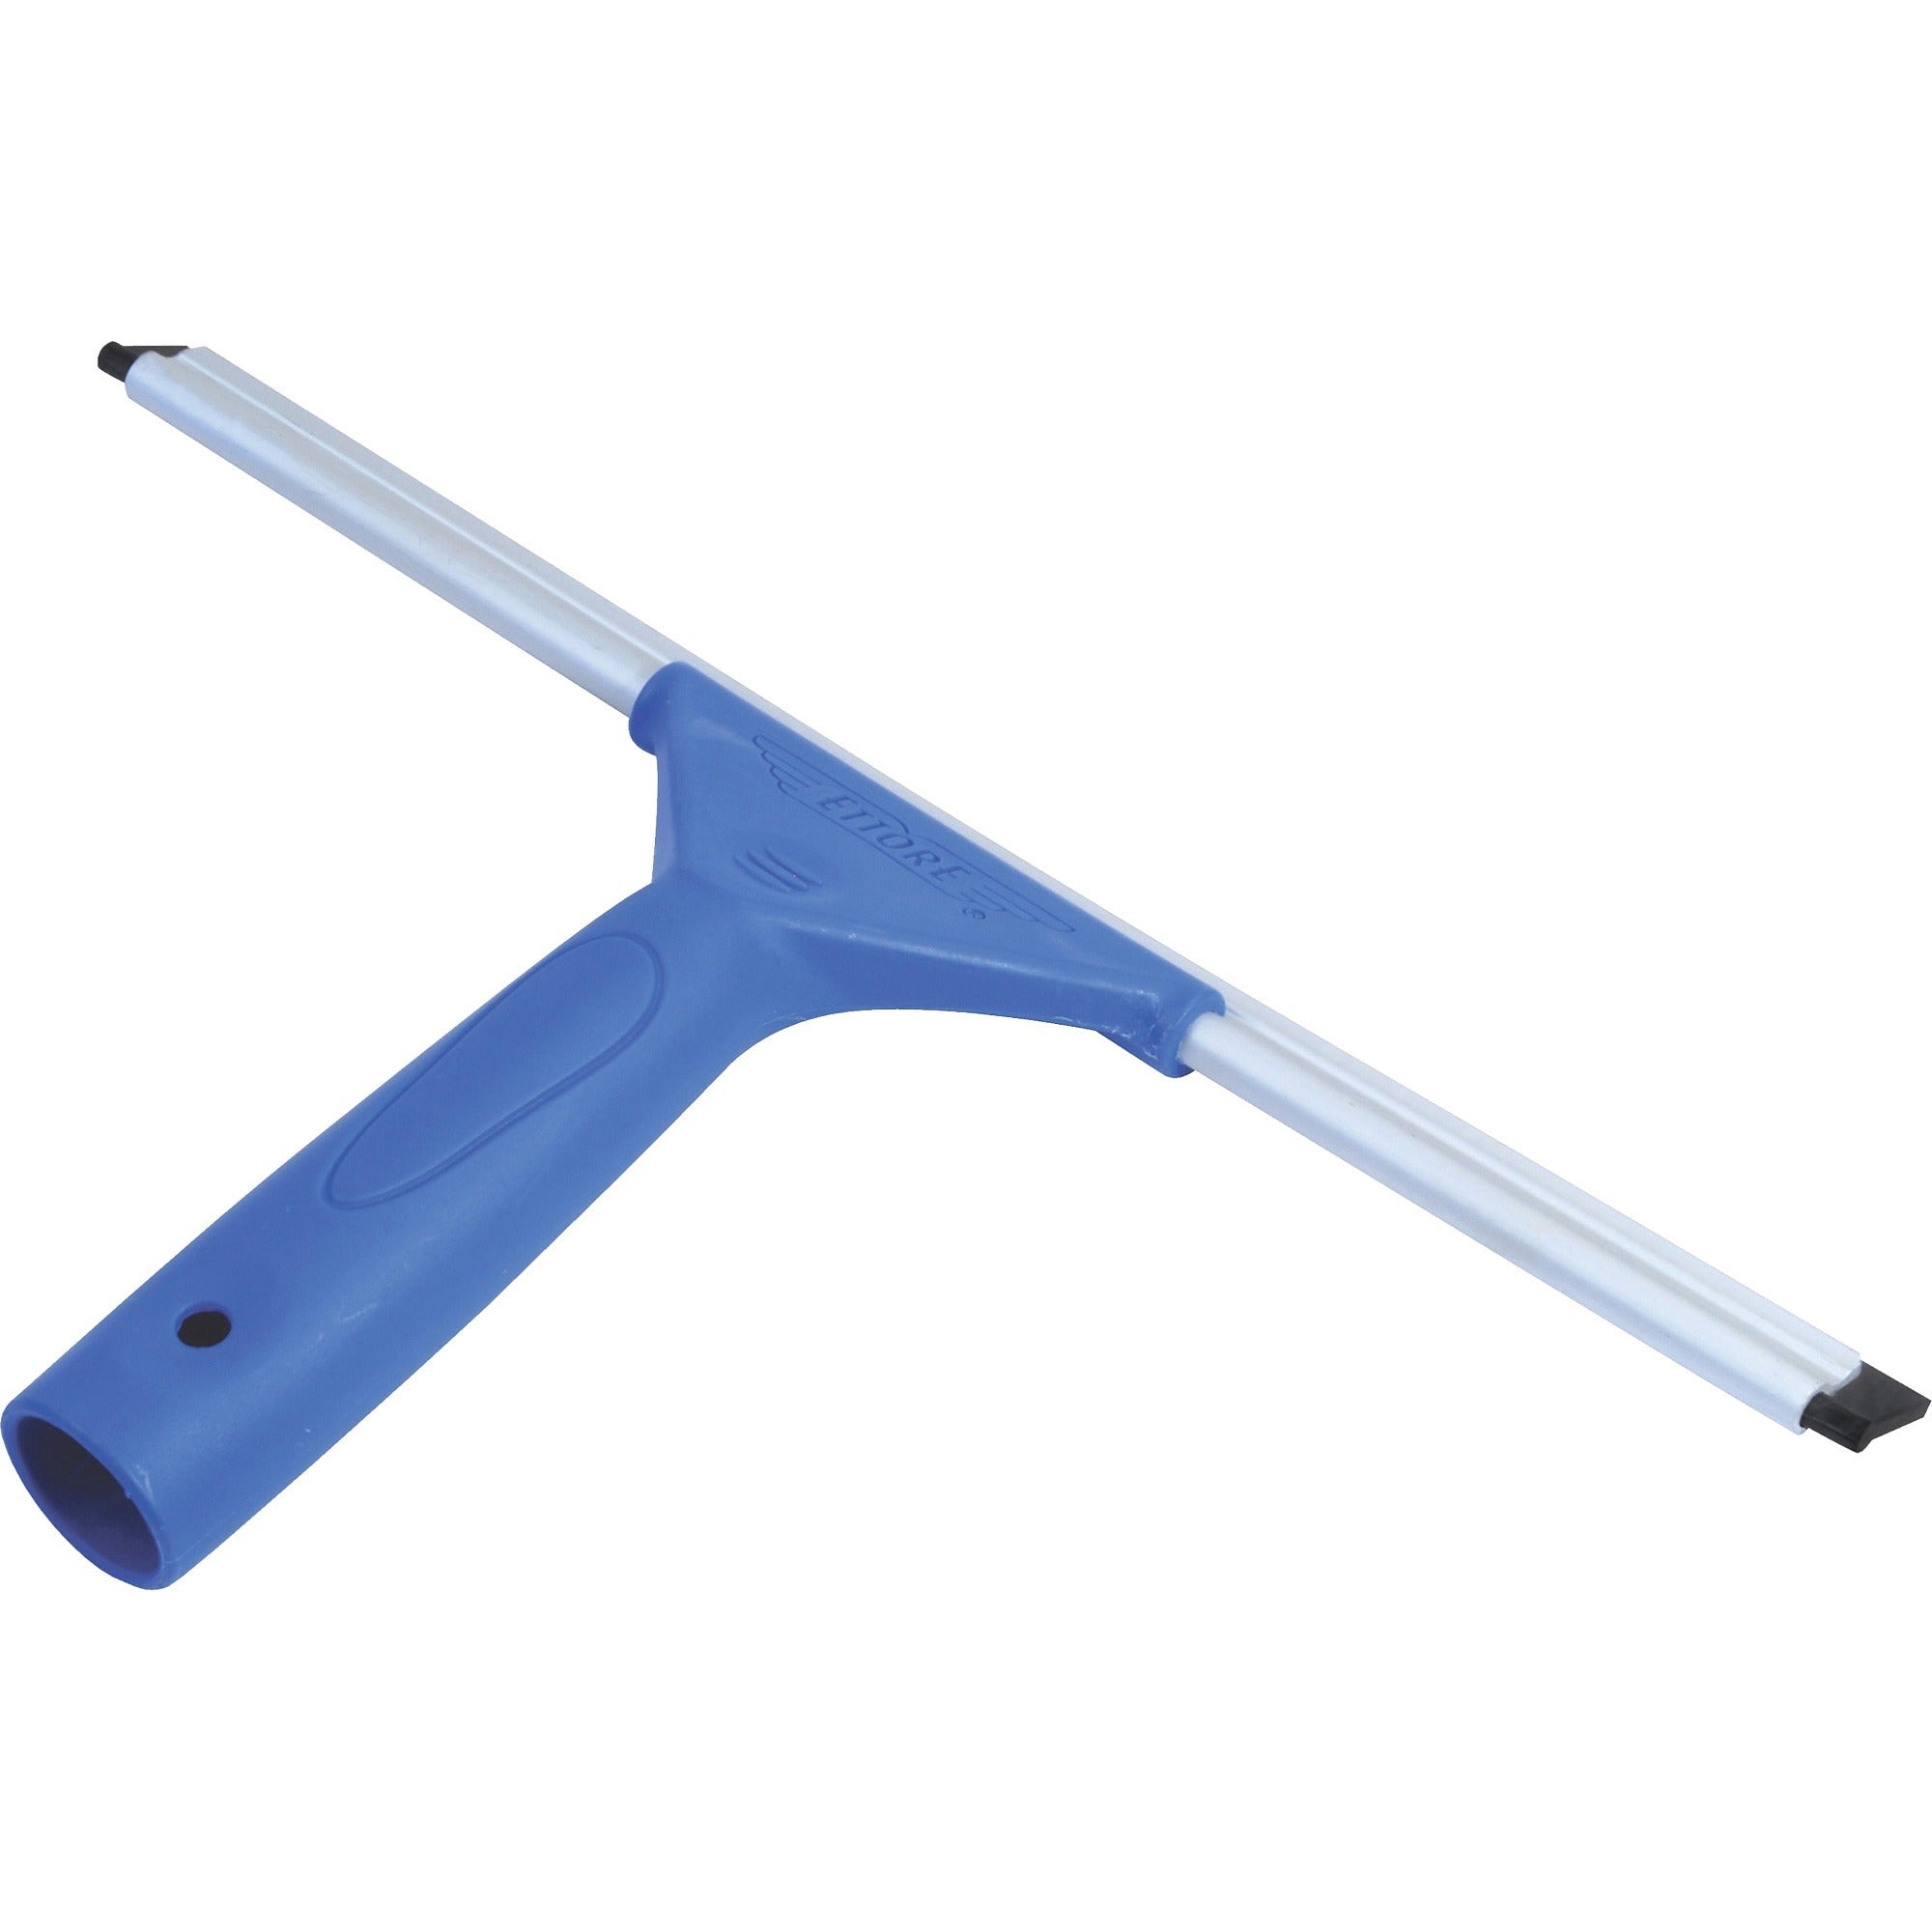 ettore-all-purpose-squeegee-rubber-blade-plastic-handle-65-height-x-10-width-x-15-length-lightweight-streak-free-blue-1each_eto17010 - 1